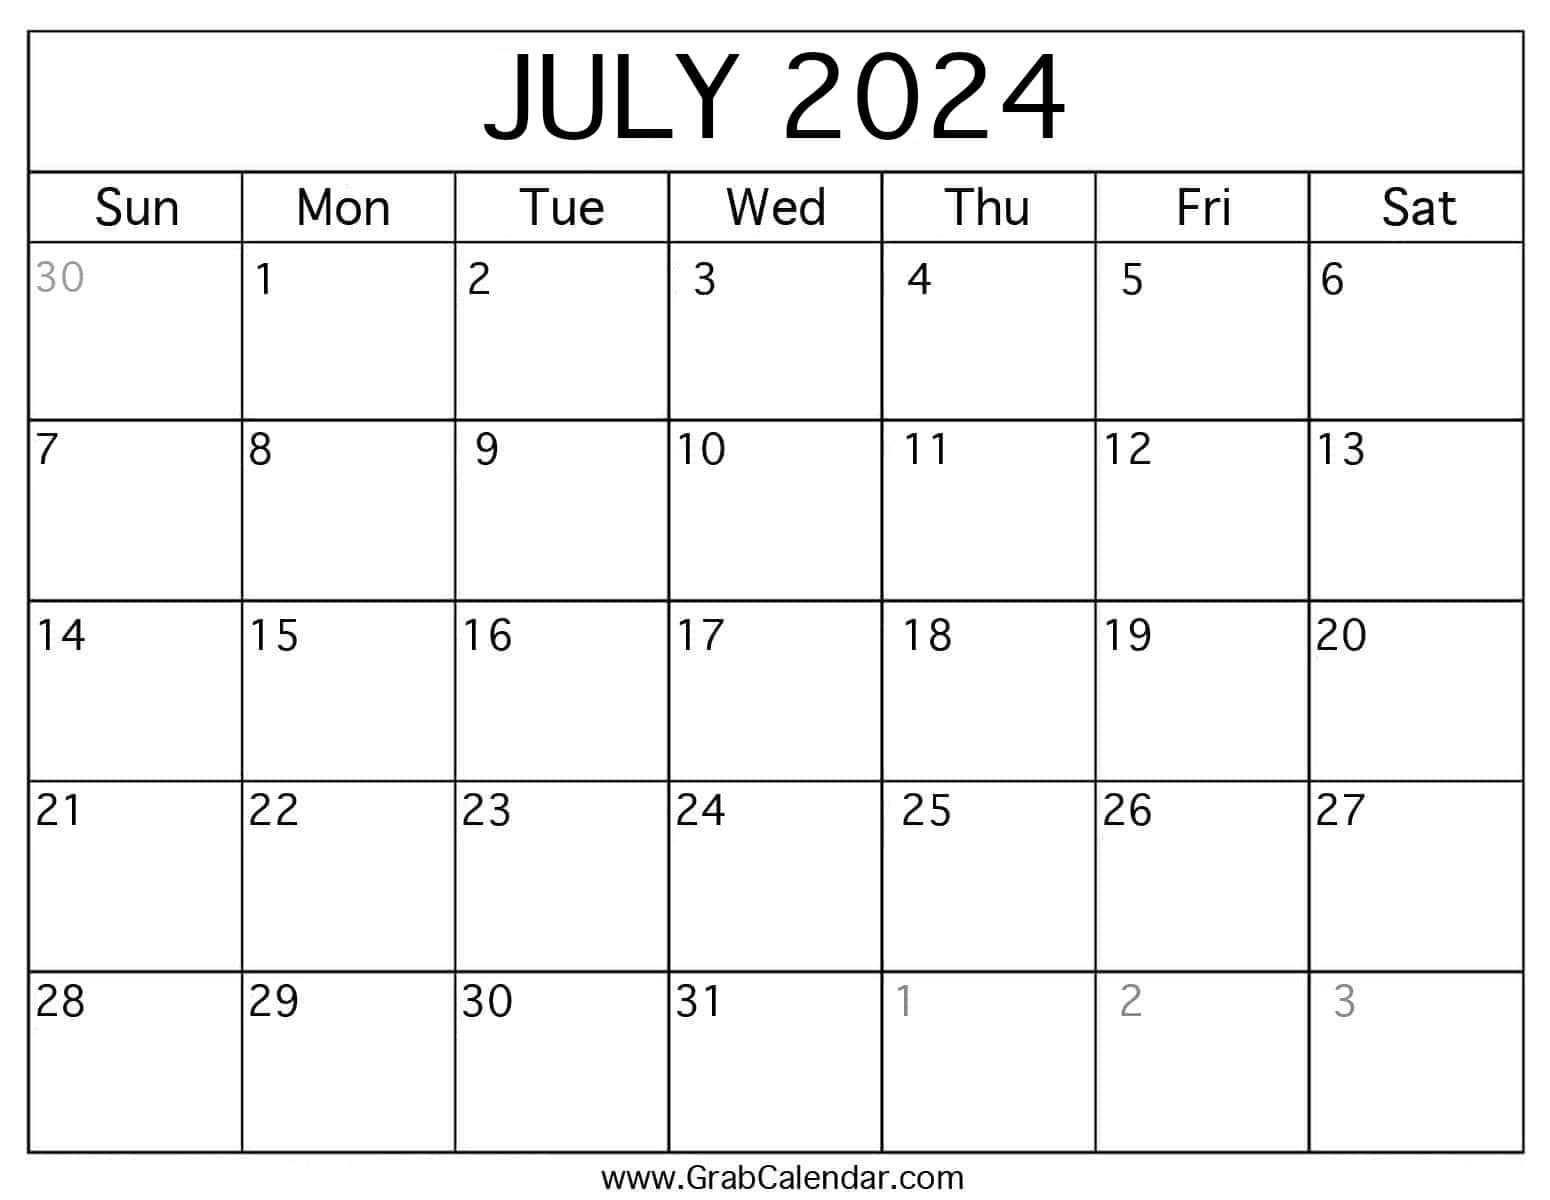 Printable July 2024 Calendar intended for Printable July 2024 Monthly Calendar